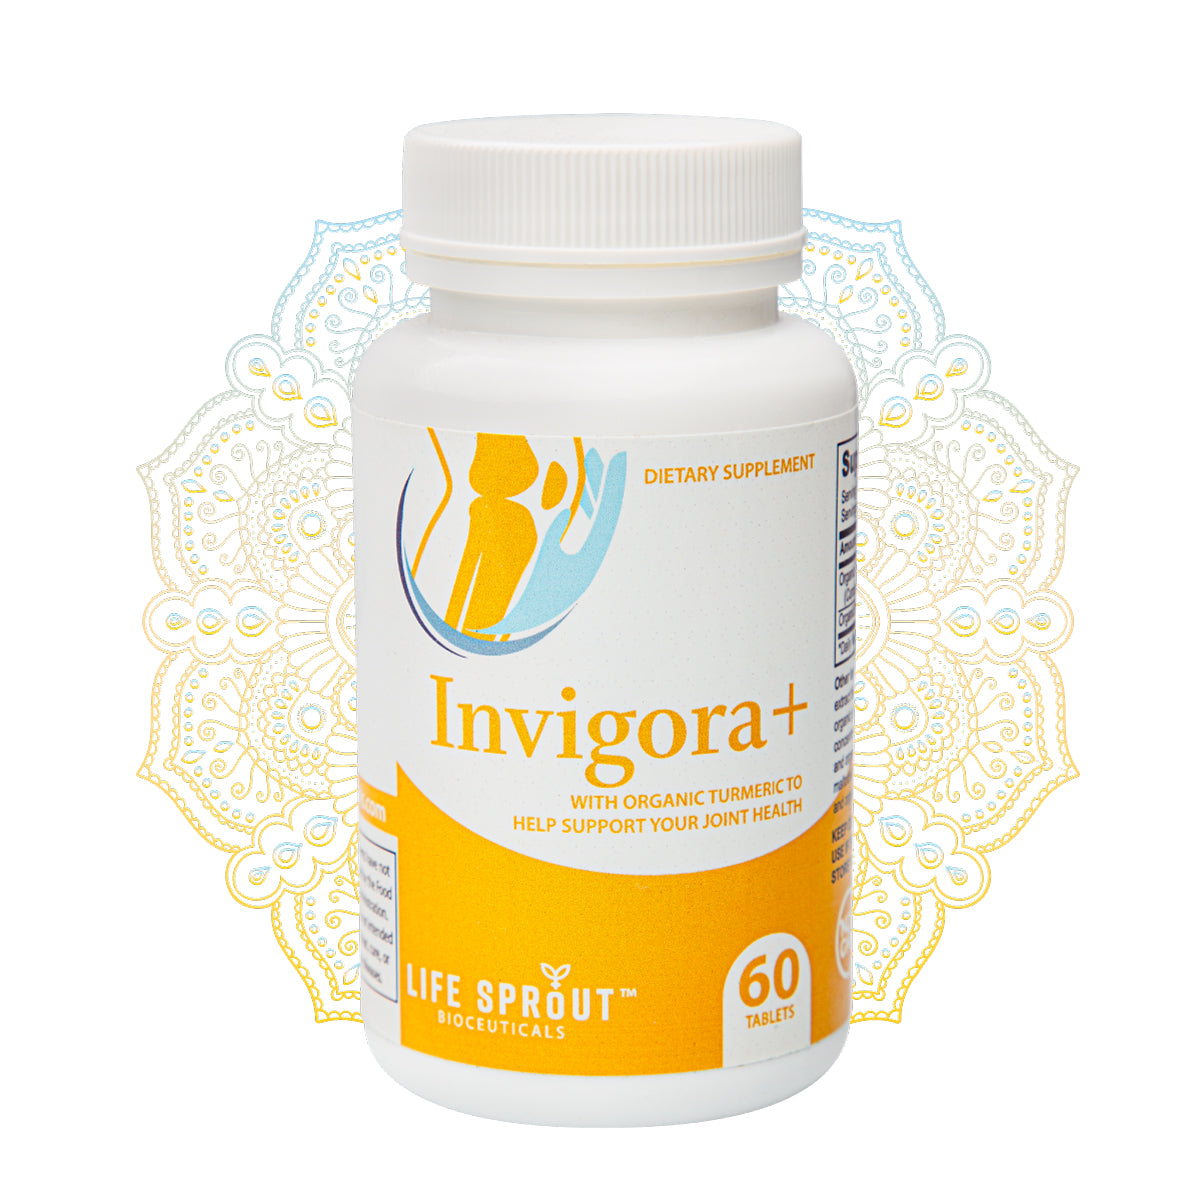 Invigora+ - Organic Turmeric Extract